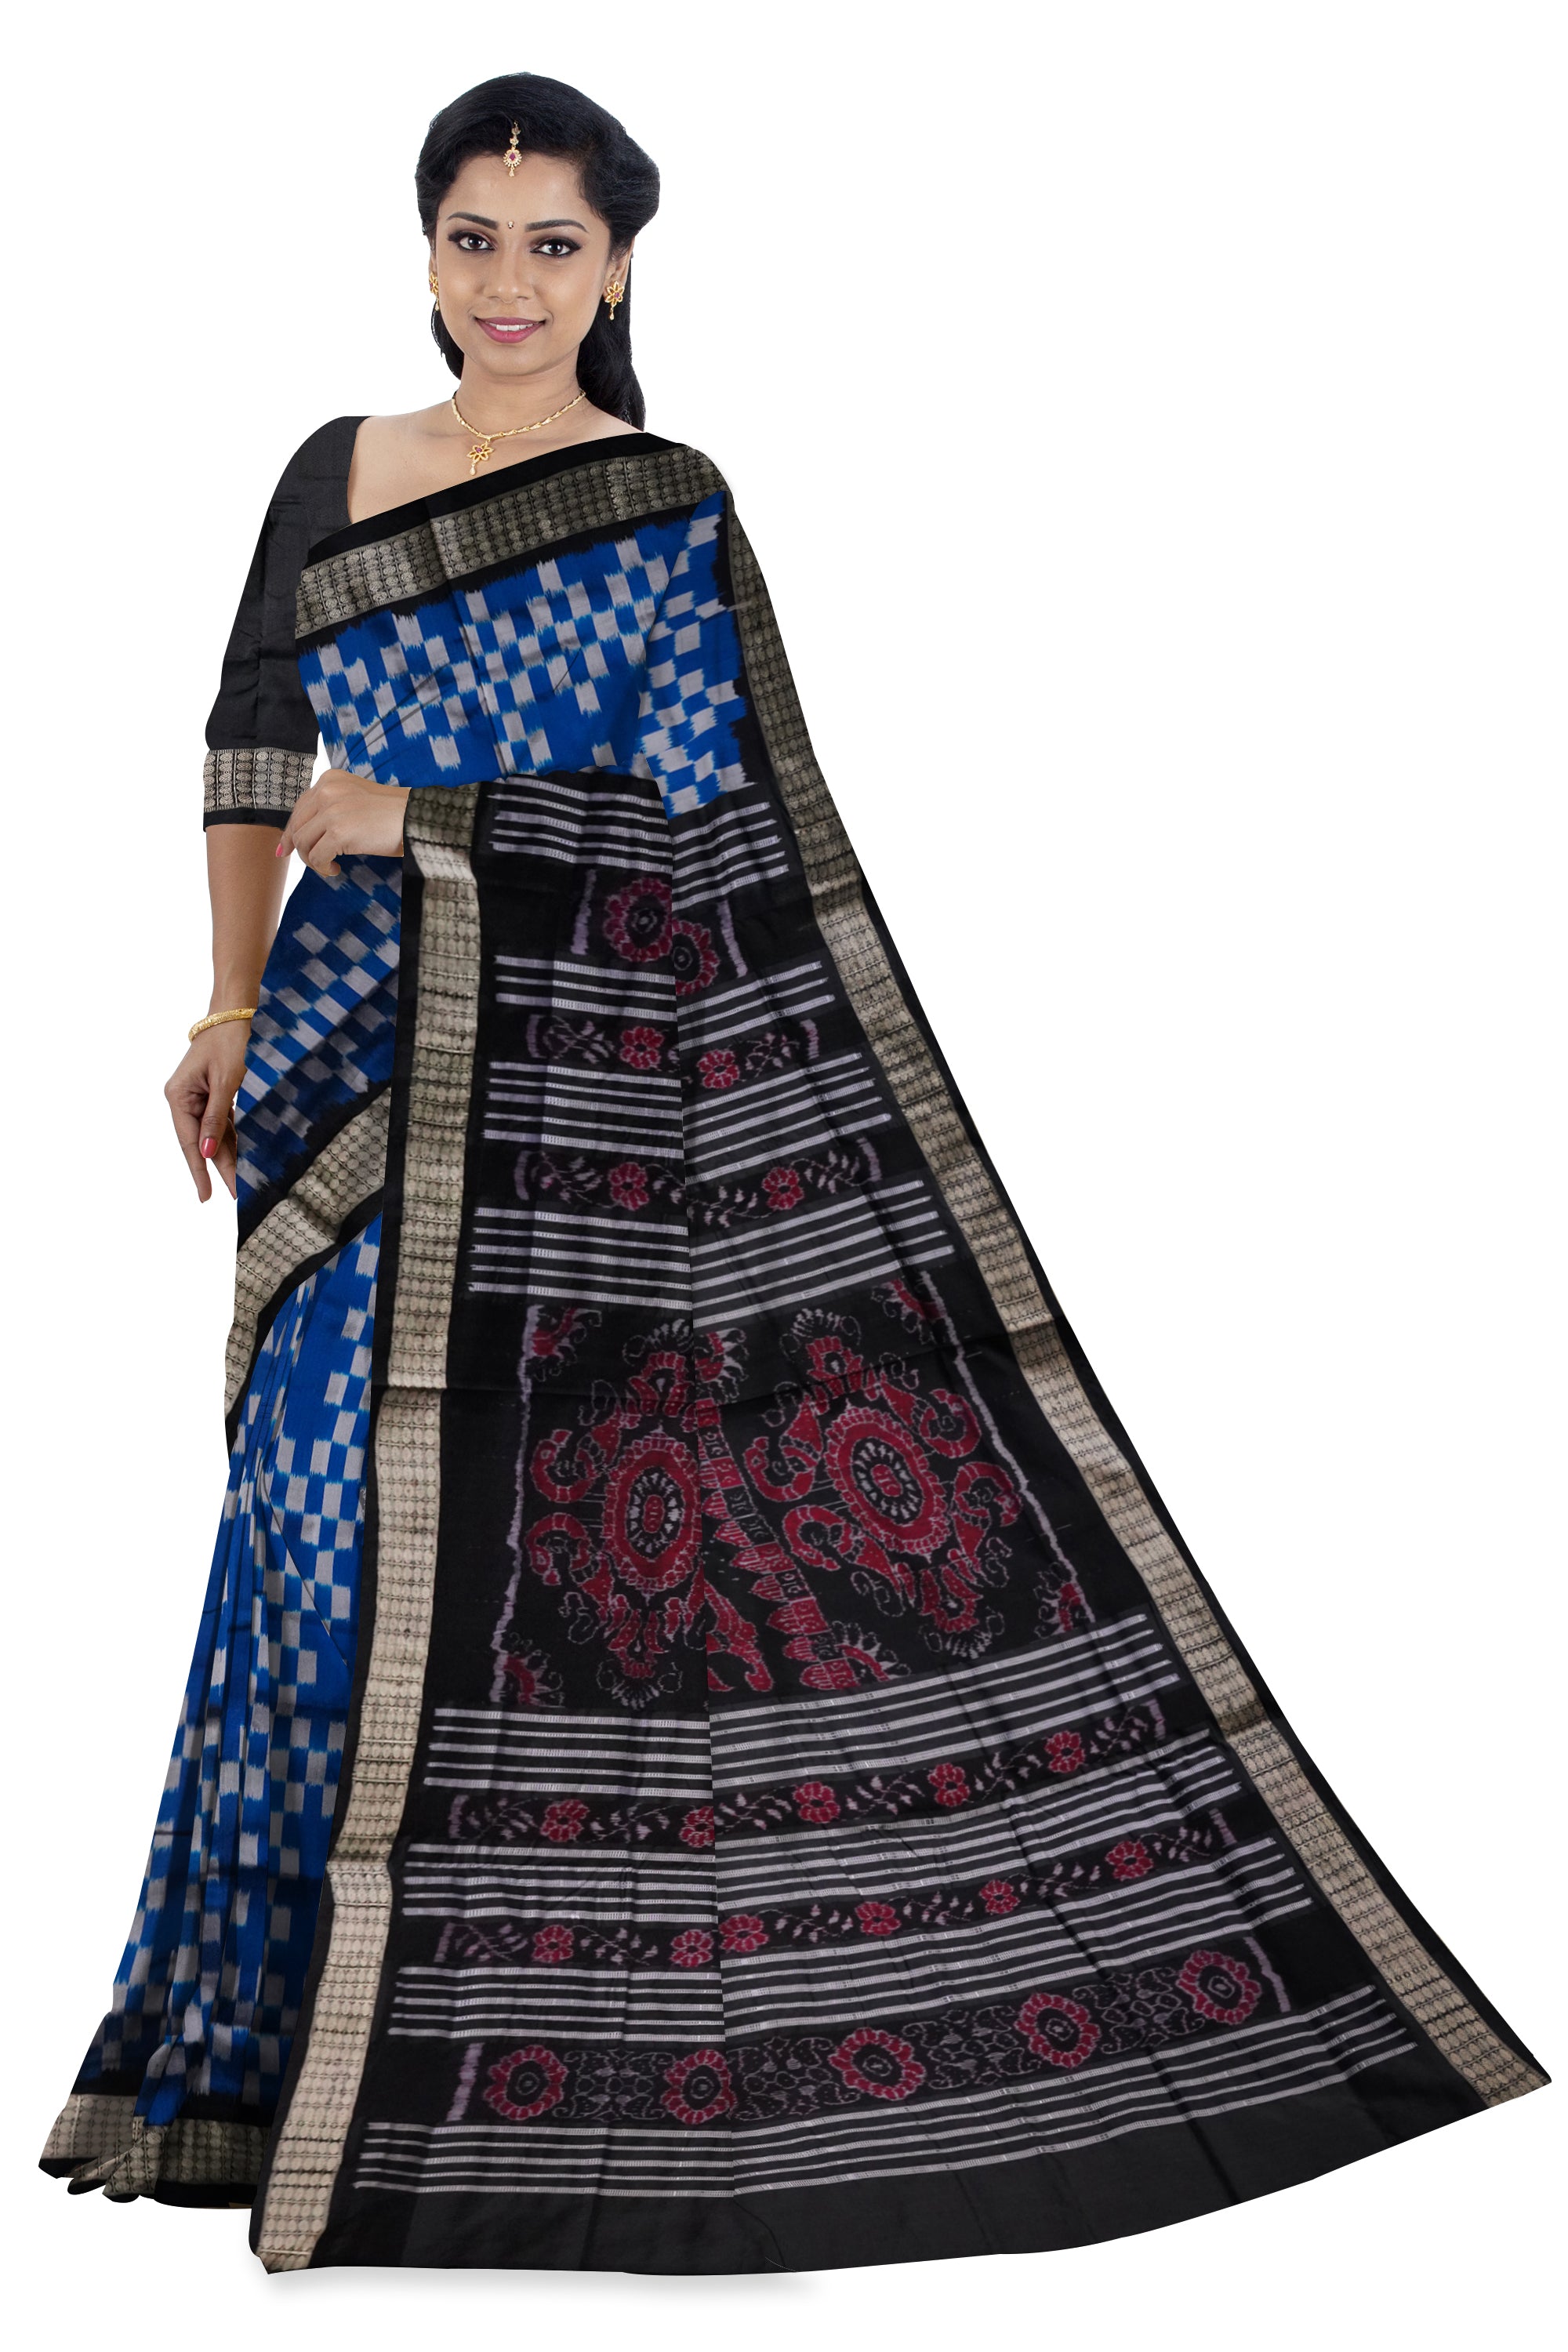 Full body pasapali pattern sambalpuri pata saree in Sky and Black colour. - Koshali Arts & Crafts Enterprise